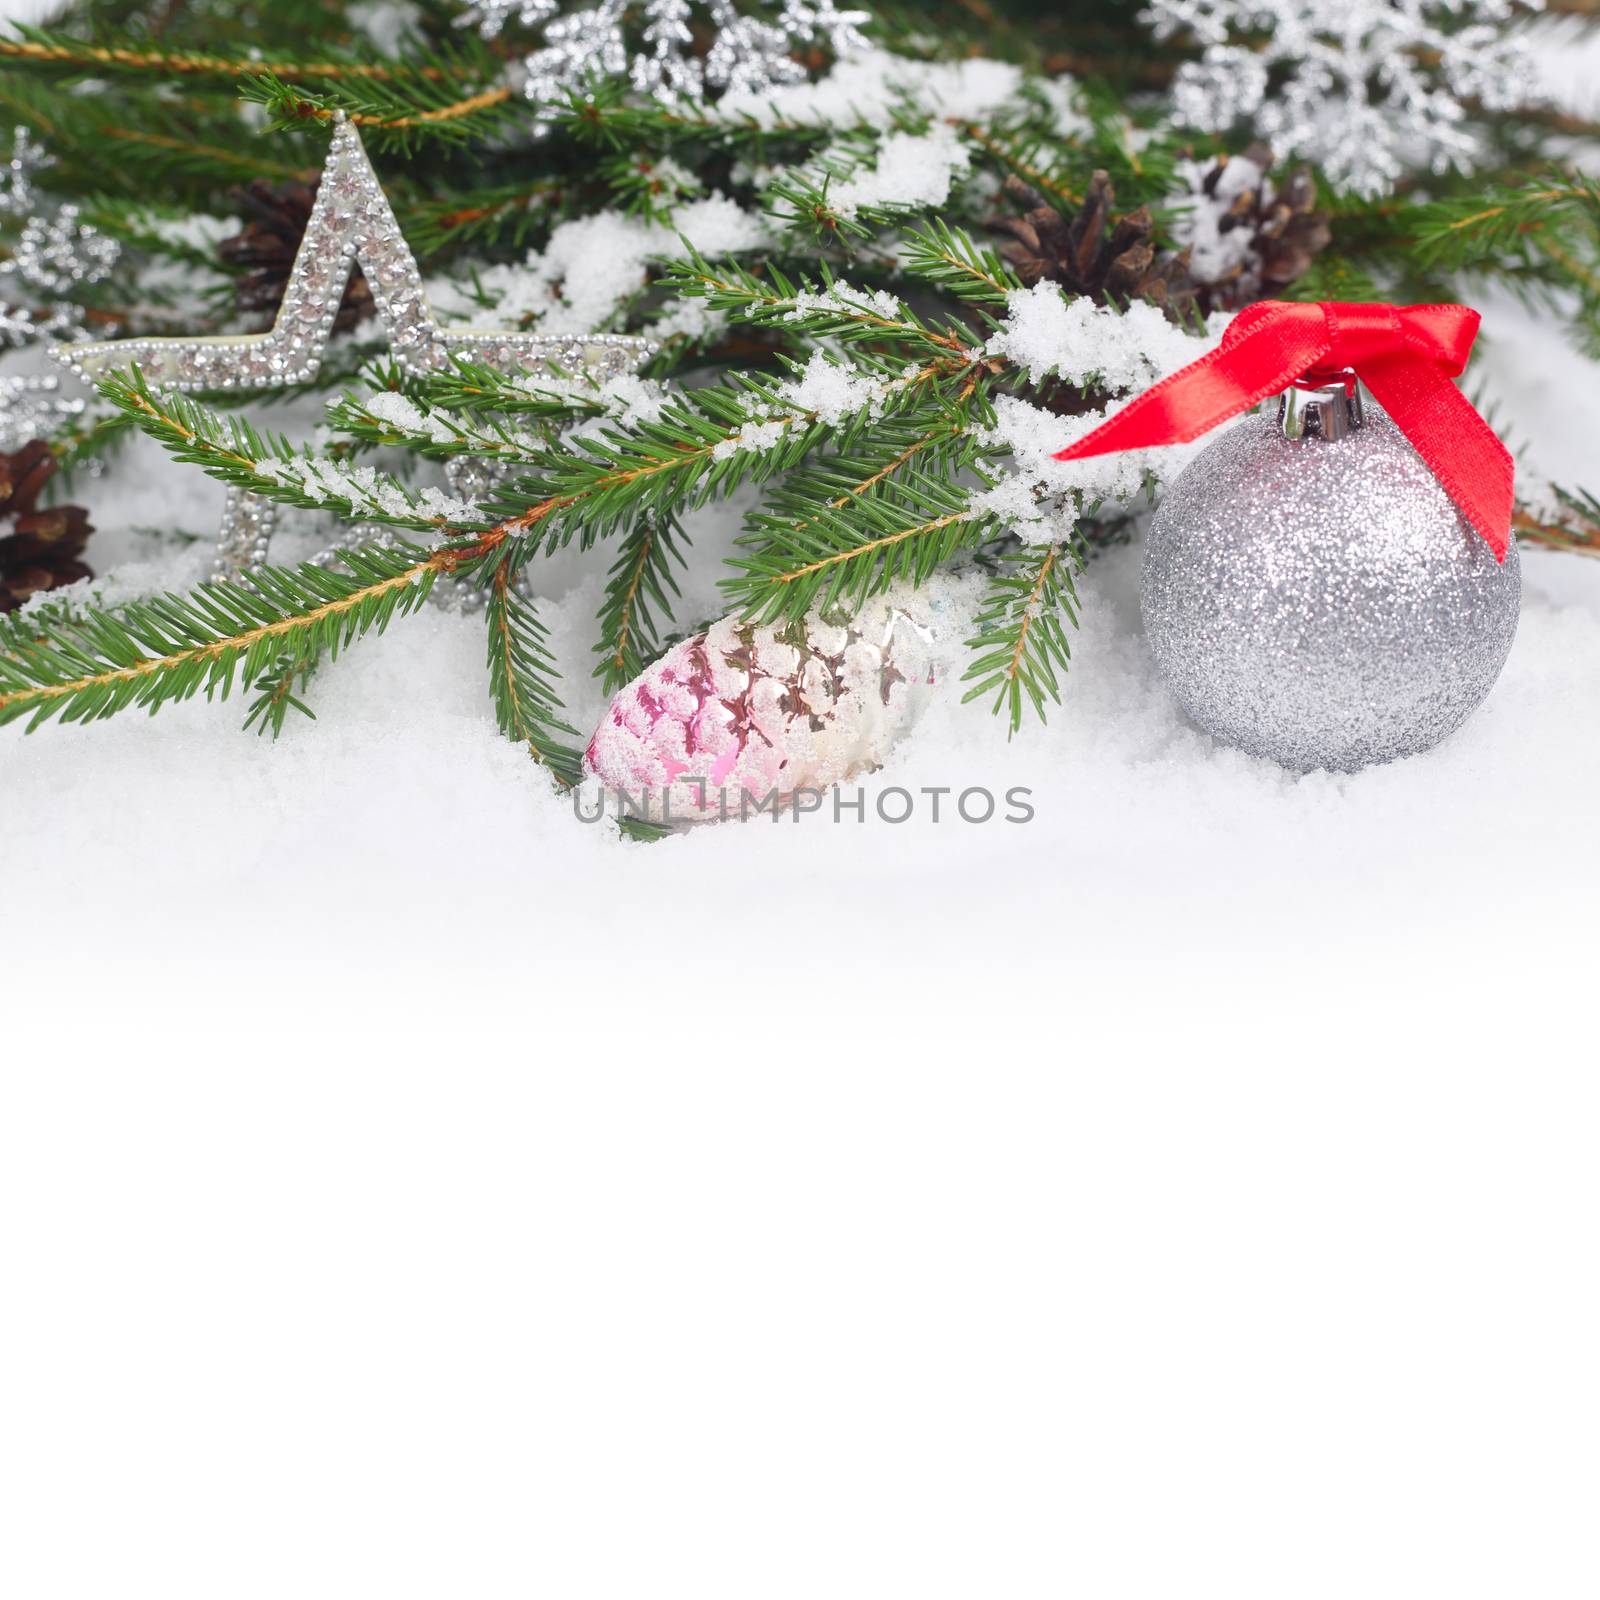 Christmas decorations on snow by destillat